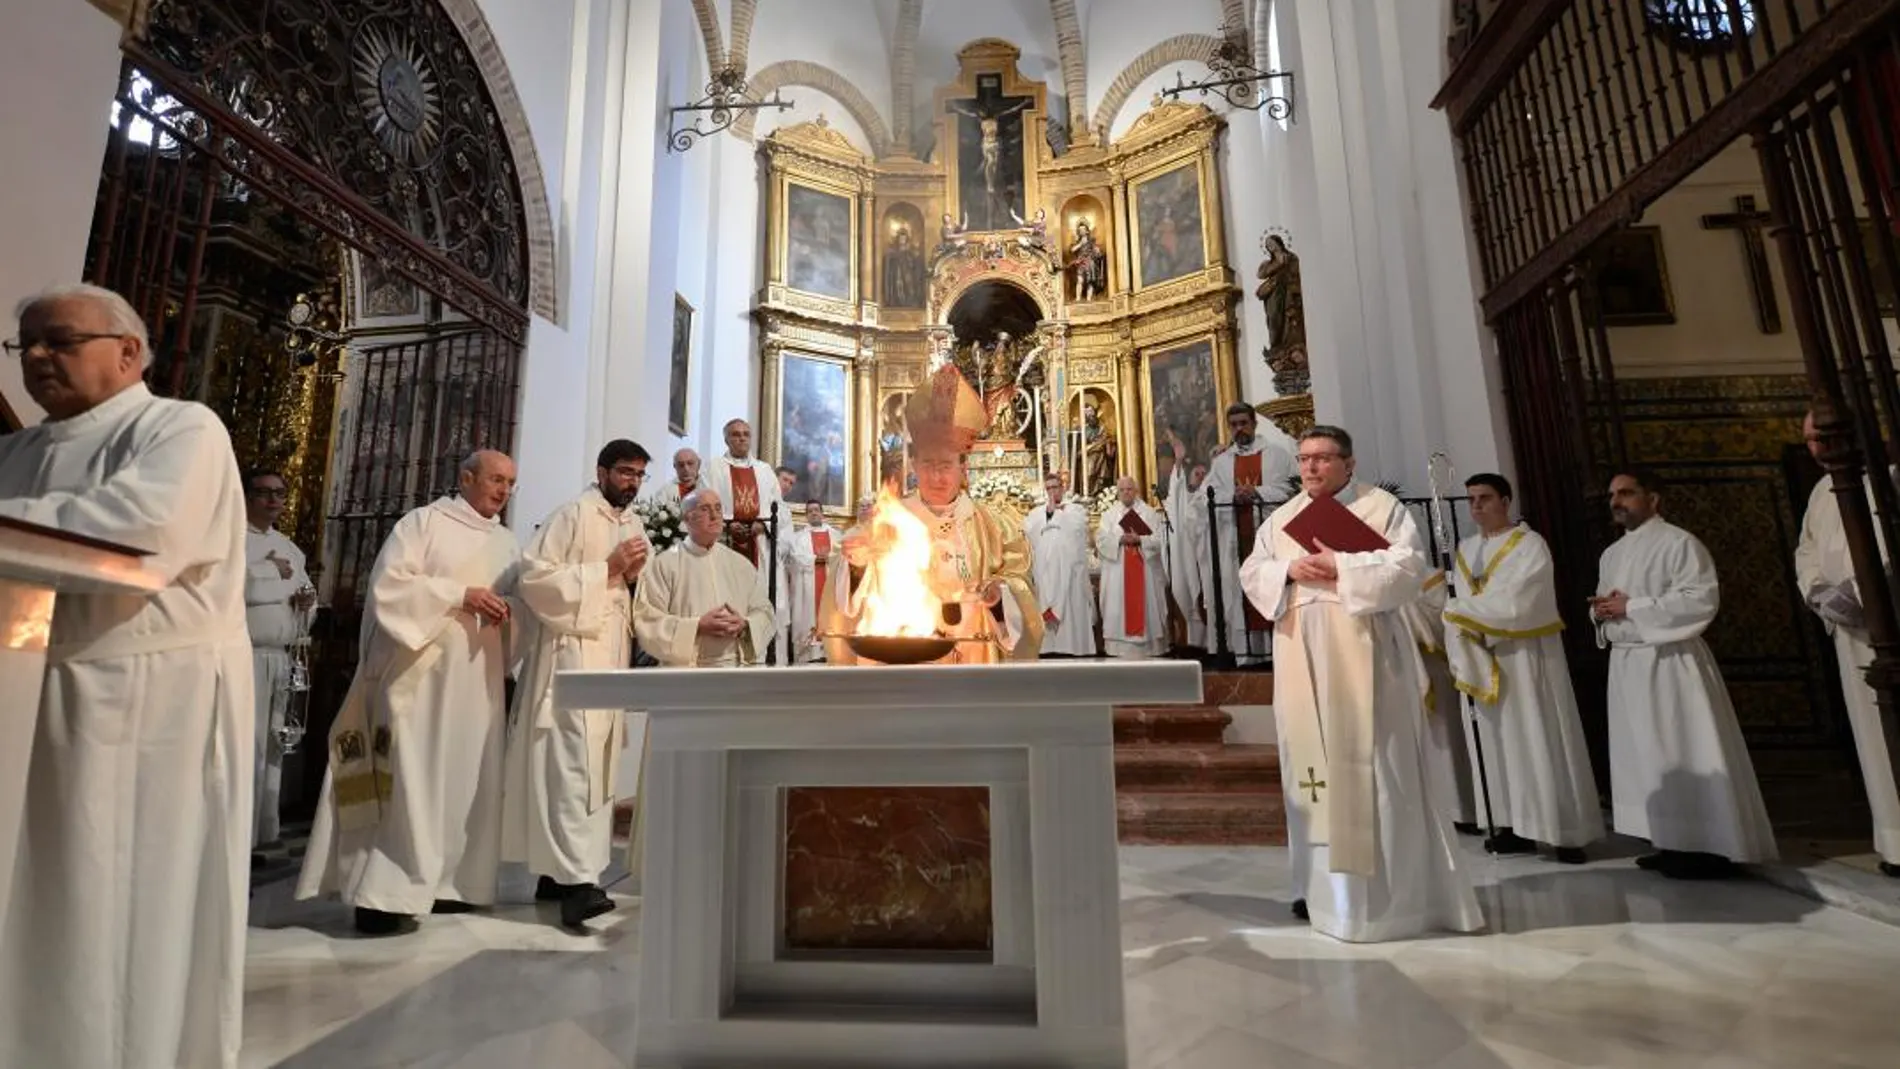 El arzobispo de Sevilla, Juan José Asenjo, consagra el altar de la remozada iglesia de Santa Catalina / Ke-Imagen